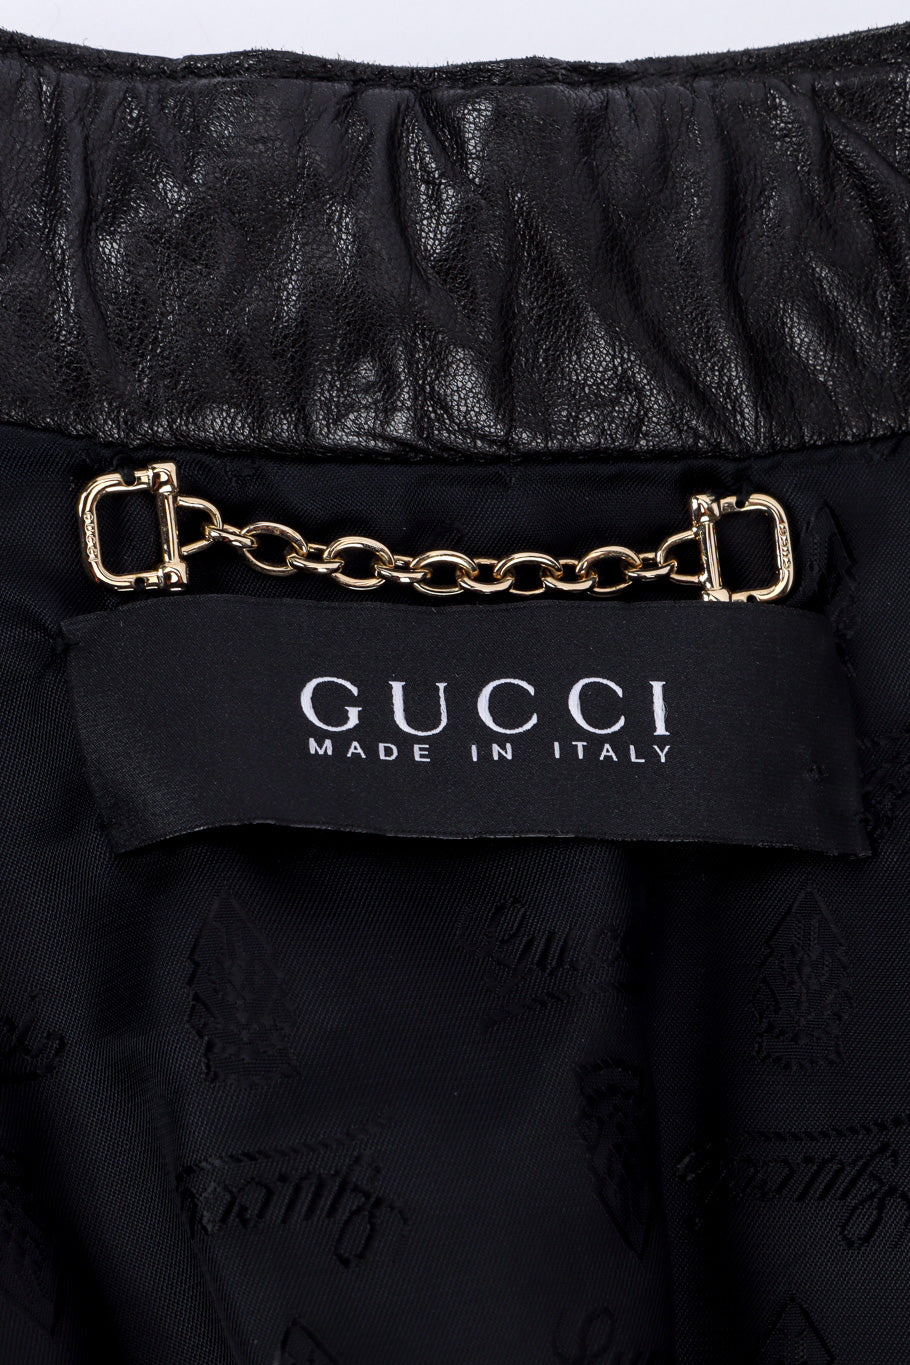 Gucci Leather Ruffle Top signature label closeup @Recessla